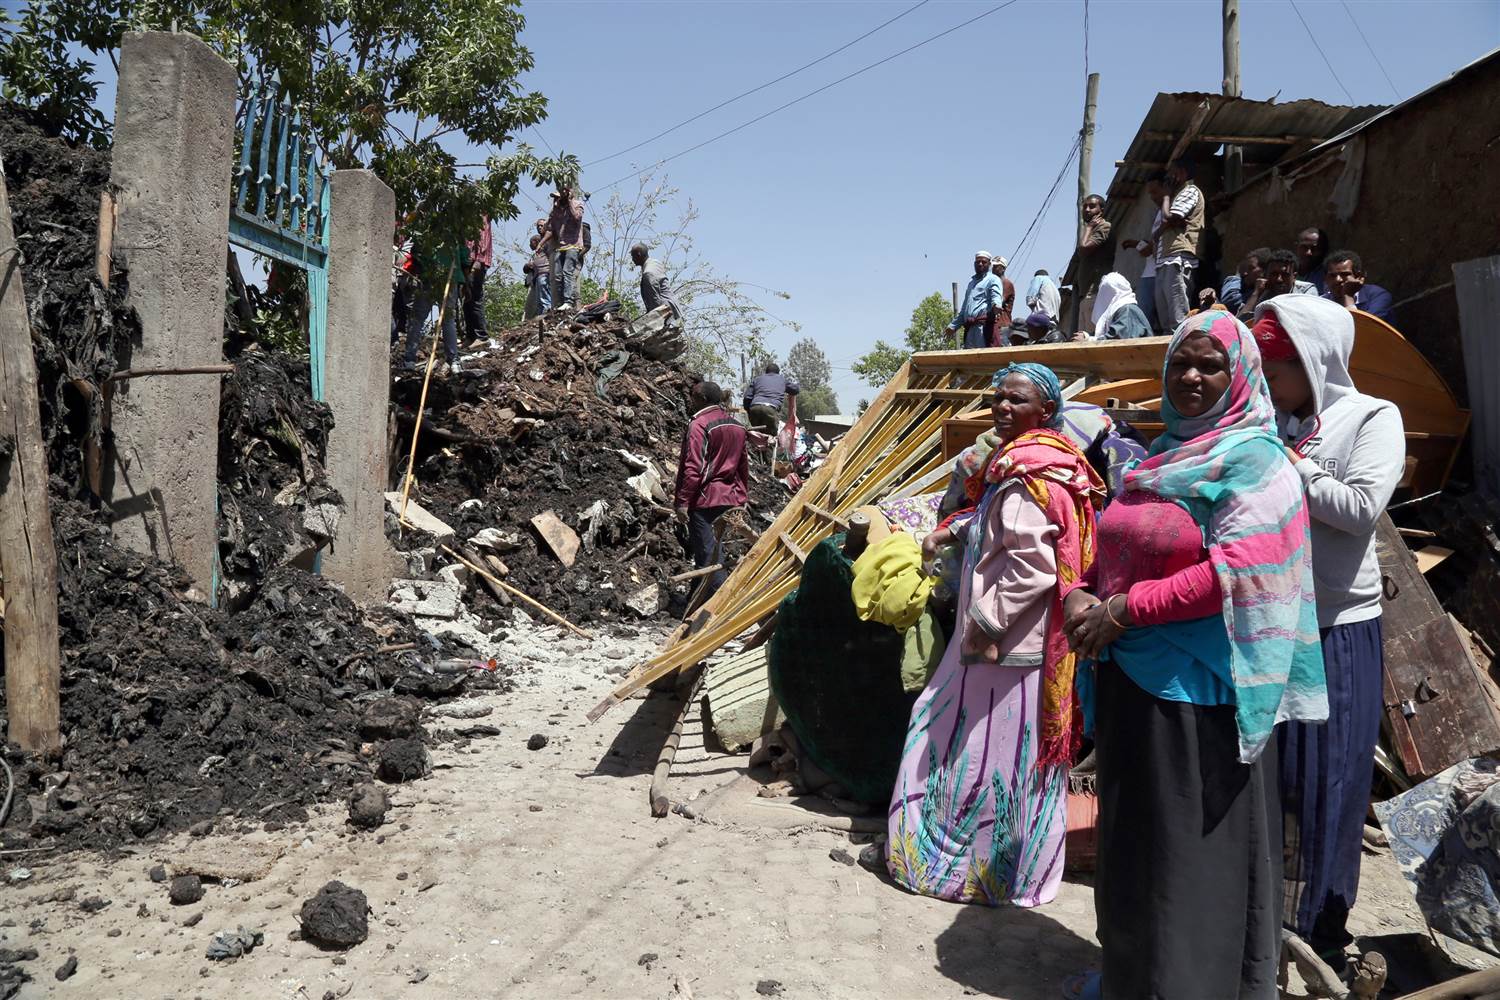 35 Killed, Scores Missing in Ethiopia Garbage Dump Landslide